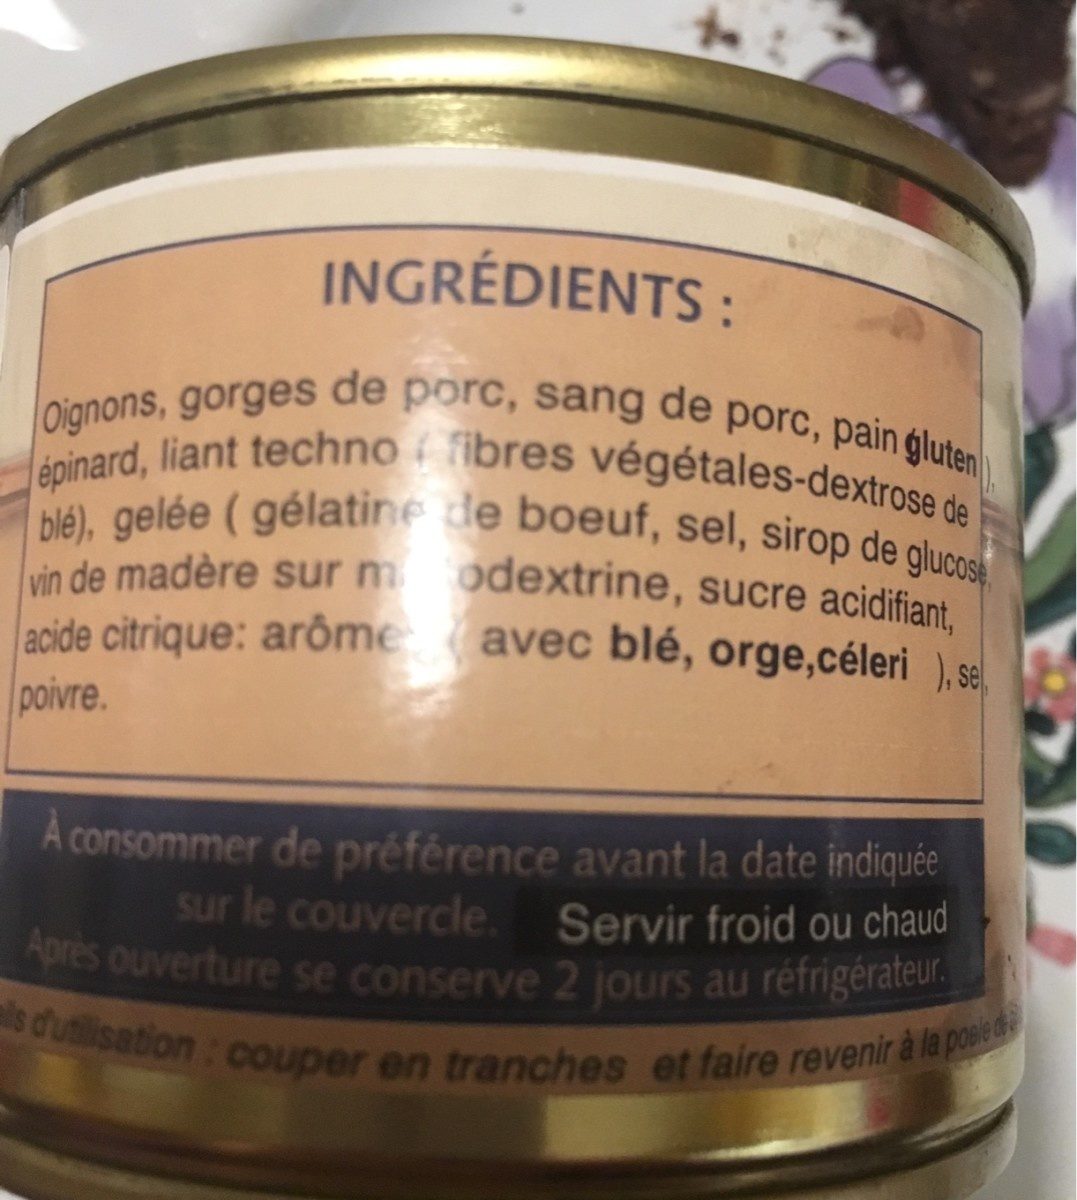 Boudin noir - Ingredients - fr